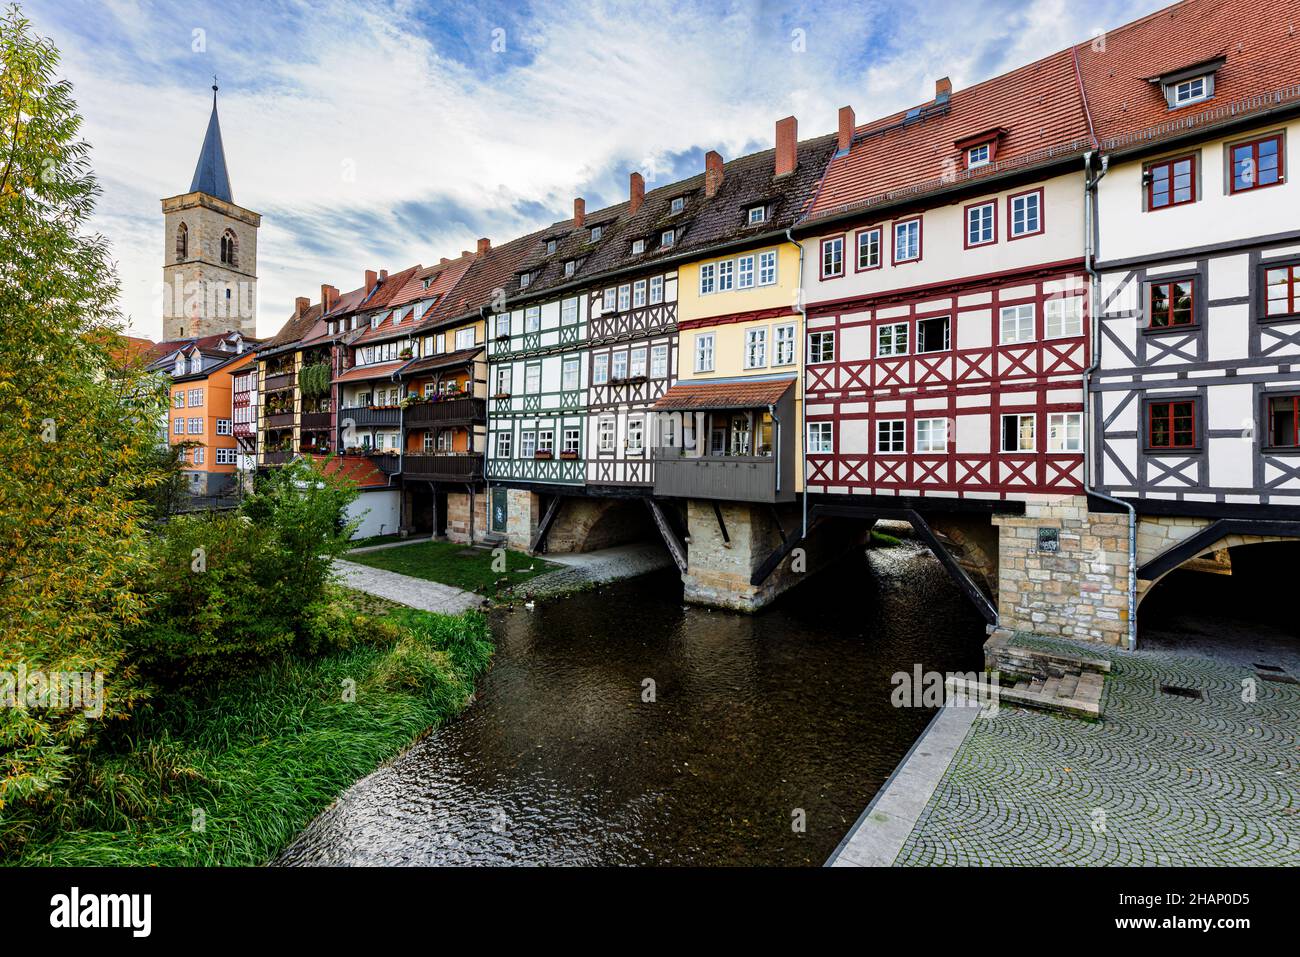 The Krämerbrücke or merchant's bridge in Erfurt, Thuringia, Germany. Stock Photo